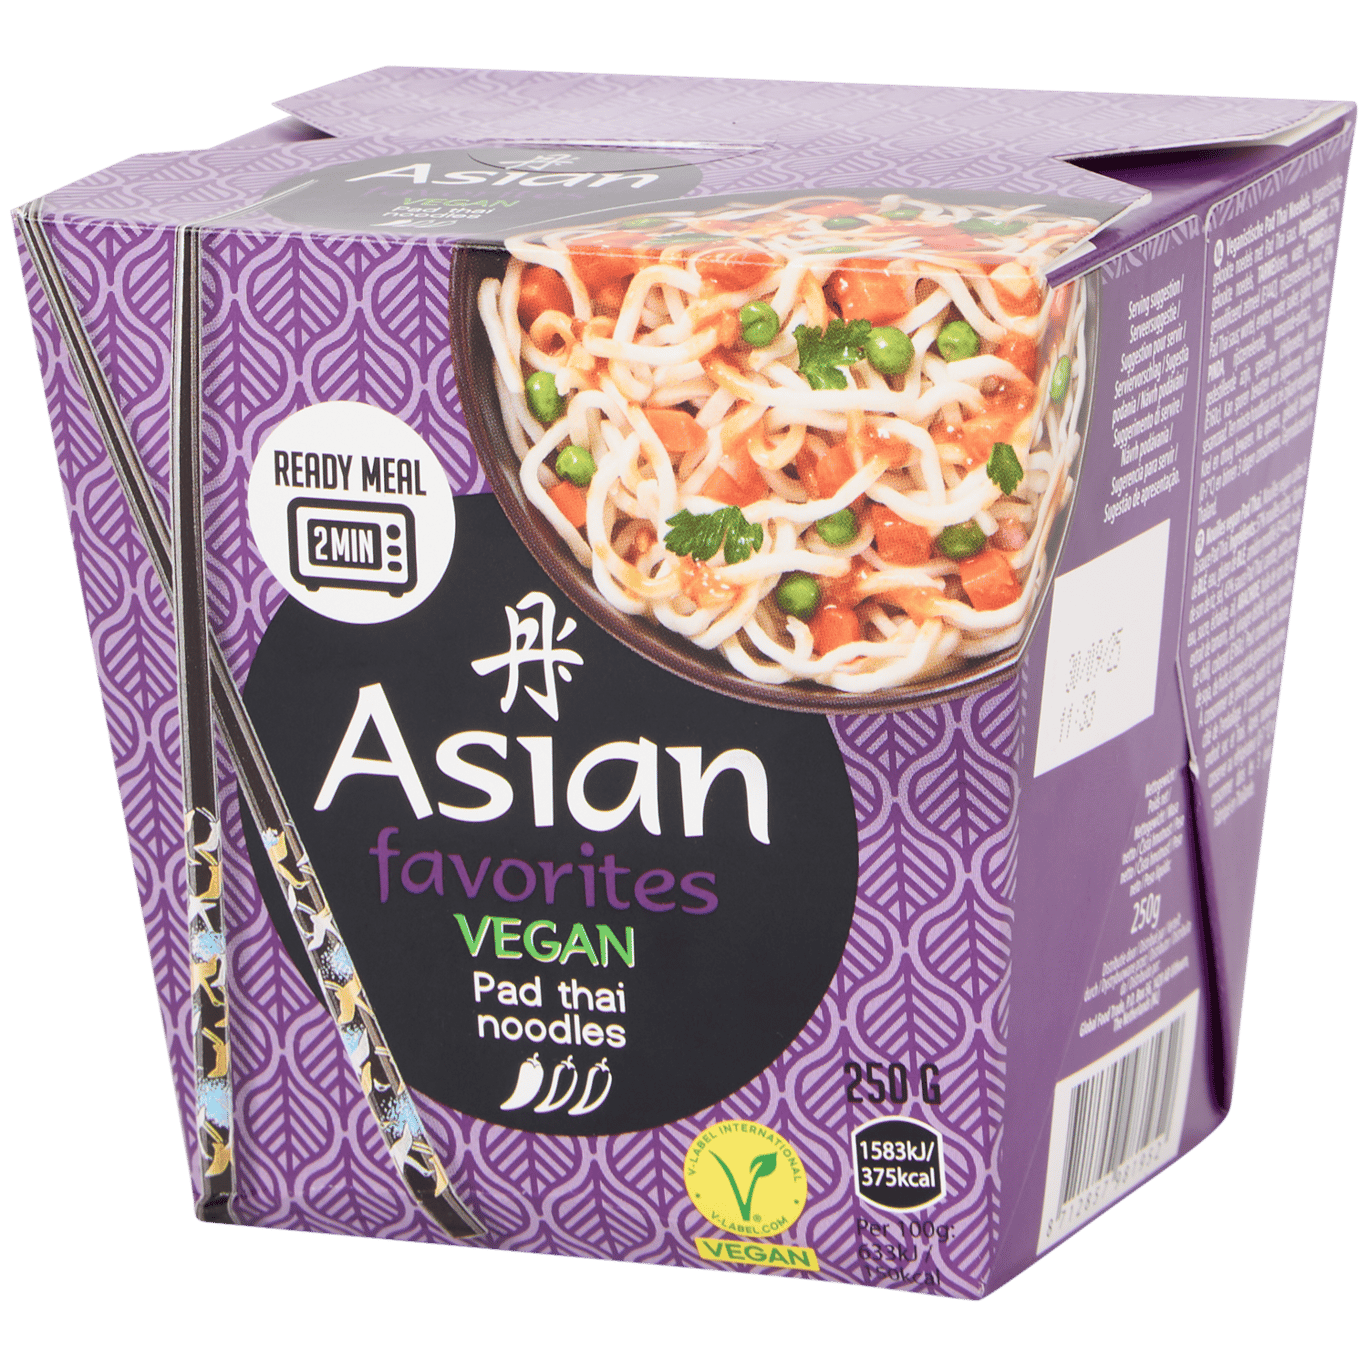 Asian Favorites instant noodles